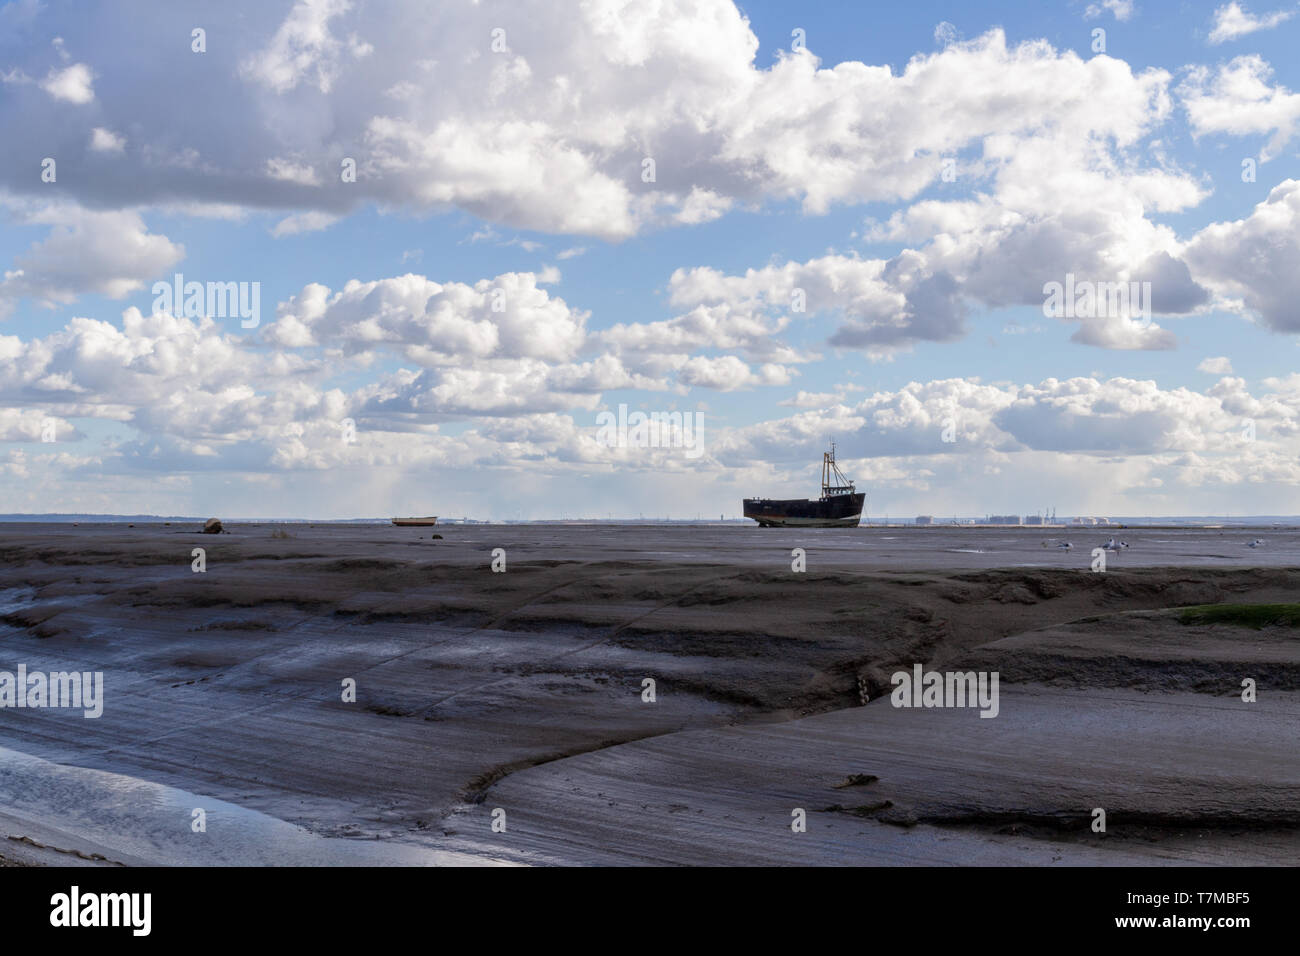 Una barca spiaggiata alla foce dell'estuario del Tamigi Foto Stock